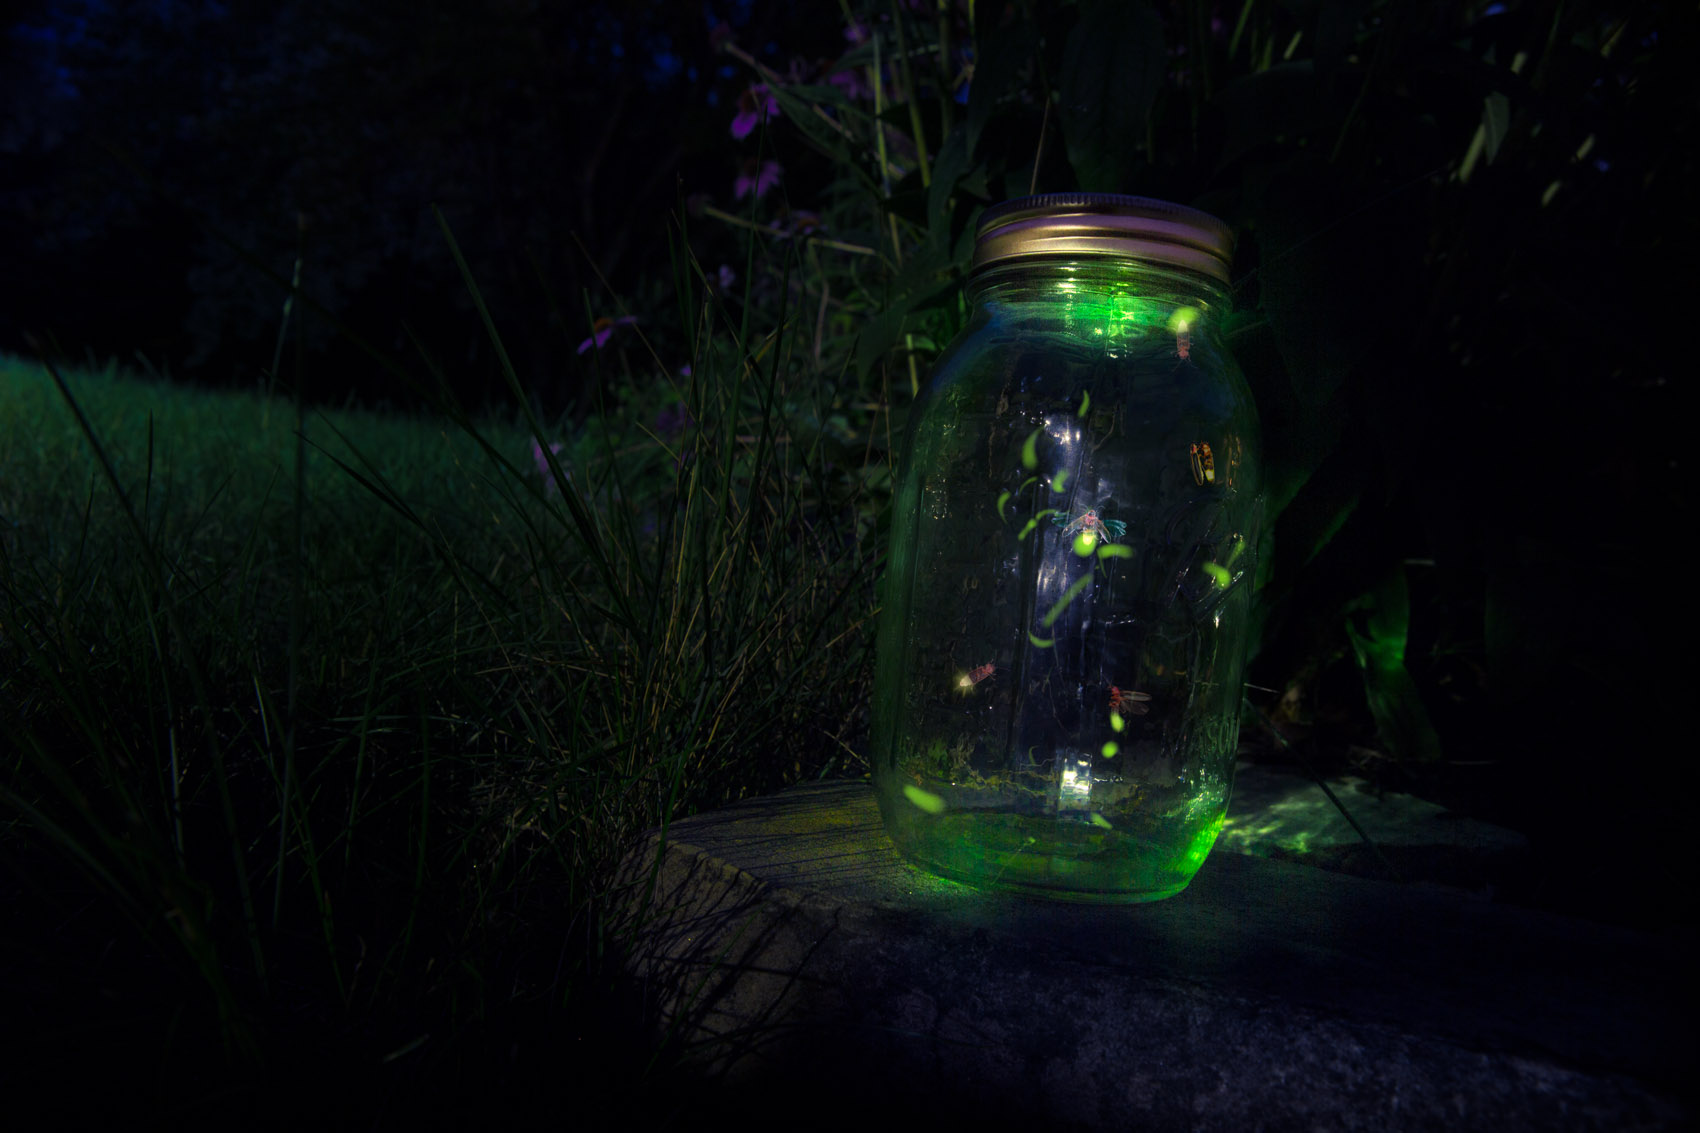 A glowing green mason jar contains a few fireflies in flight.